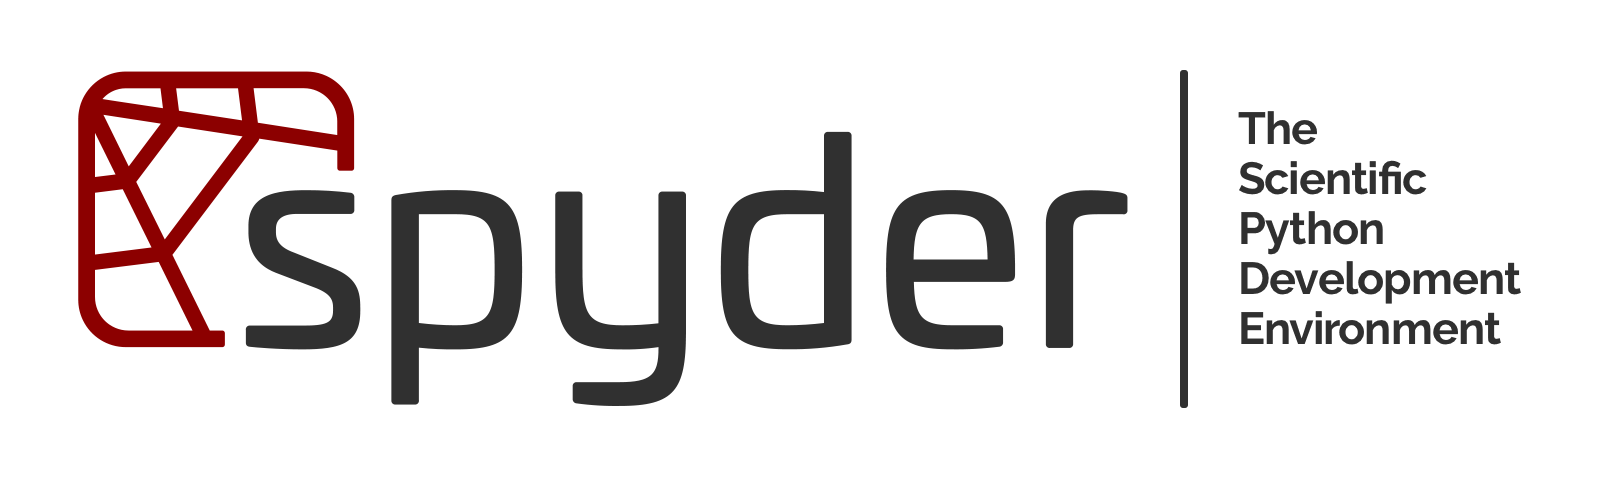 Spyder Docs - Documentation for the Scientific Python Development Environment